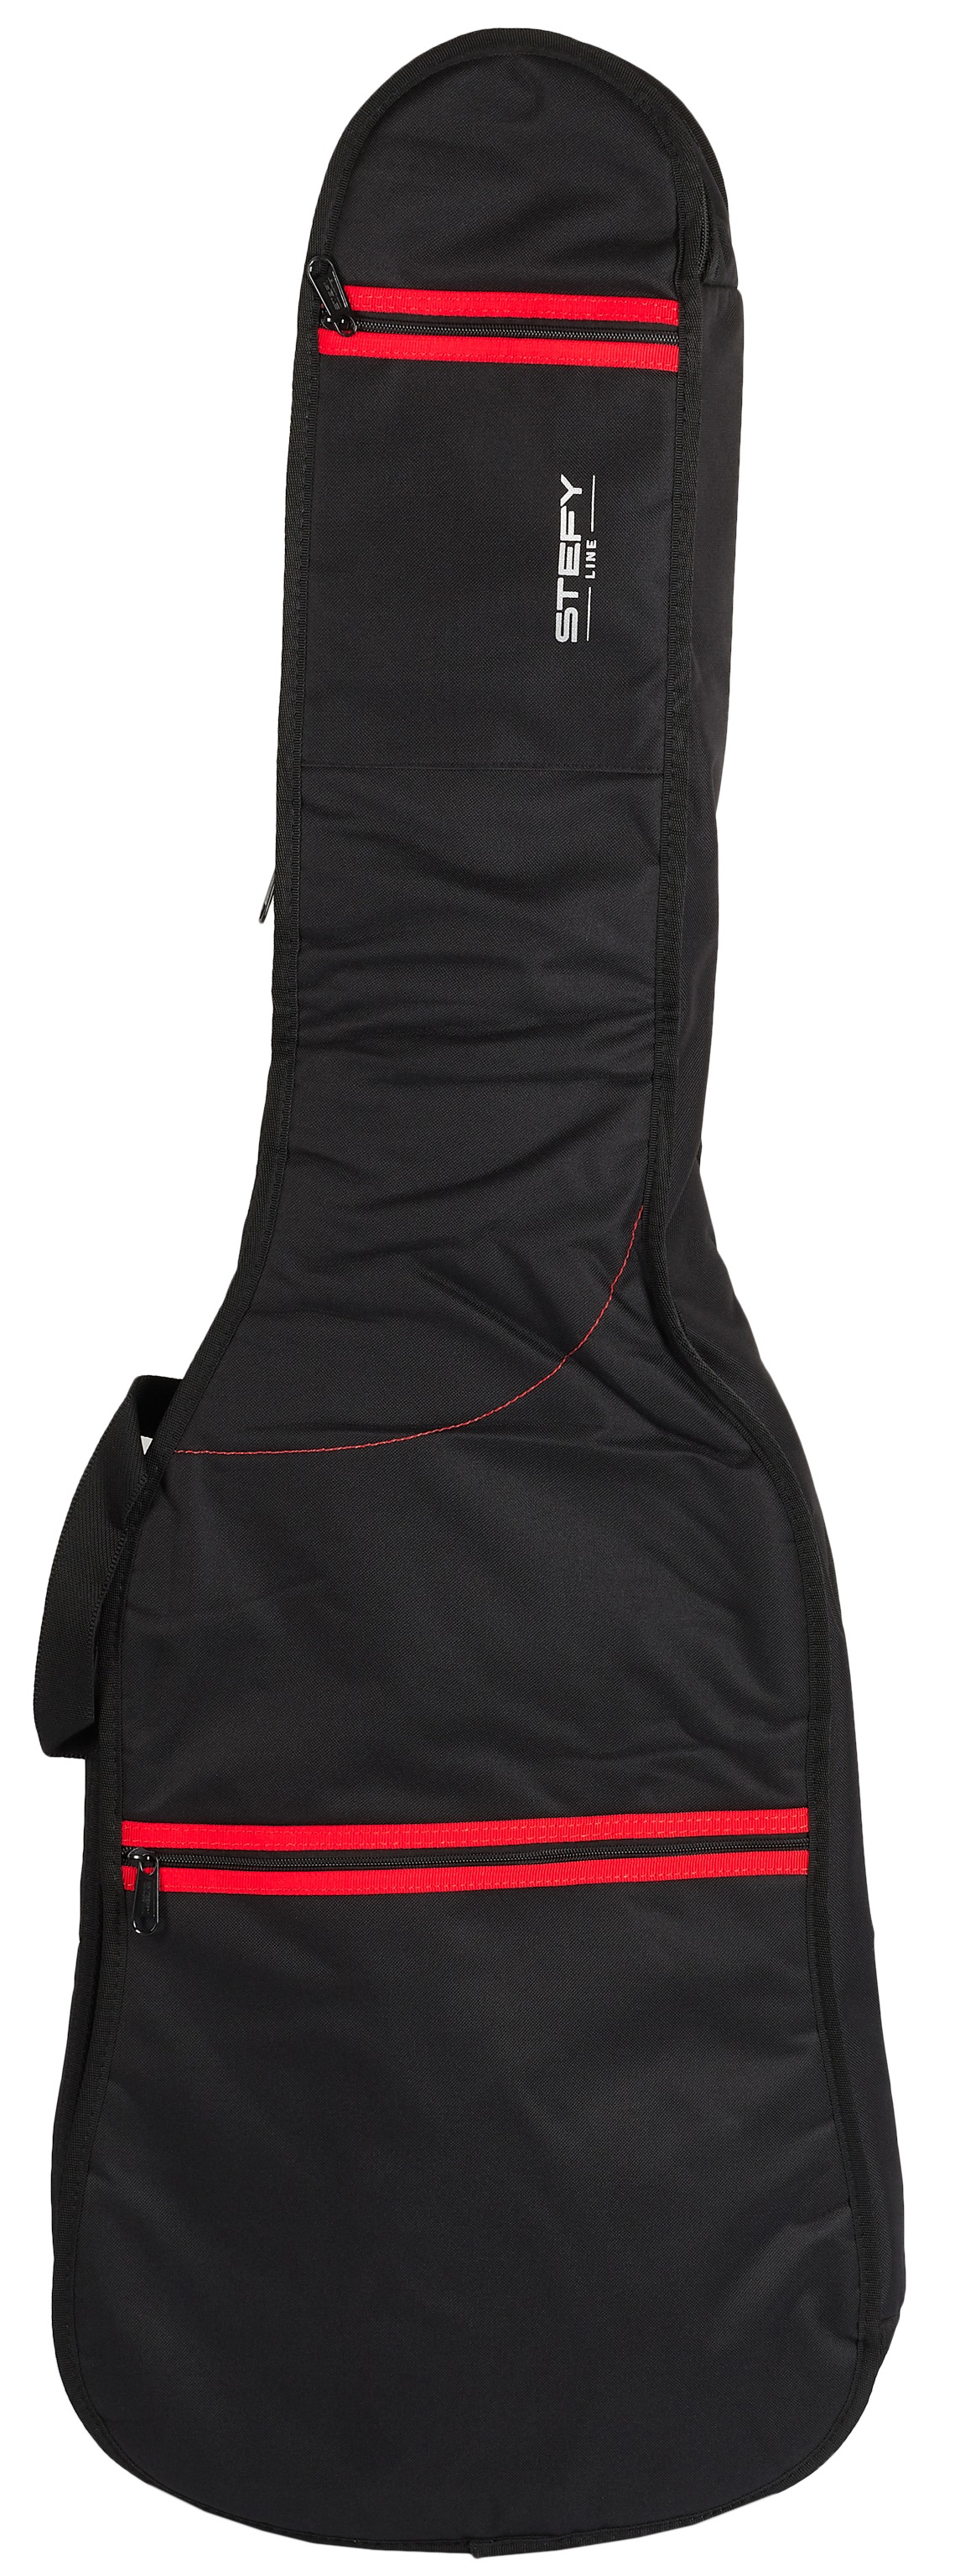 Stefy Line 200 Electric Bass Guitar Bag